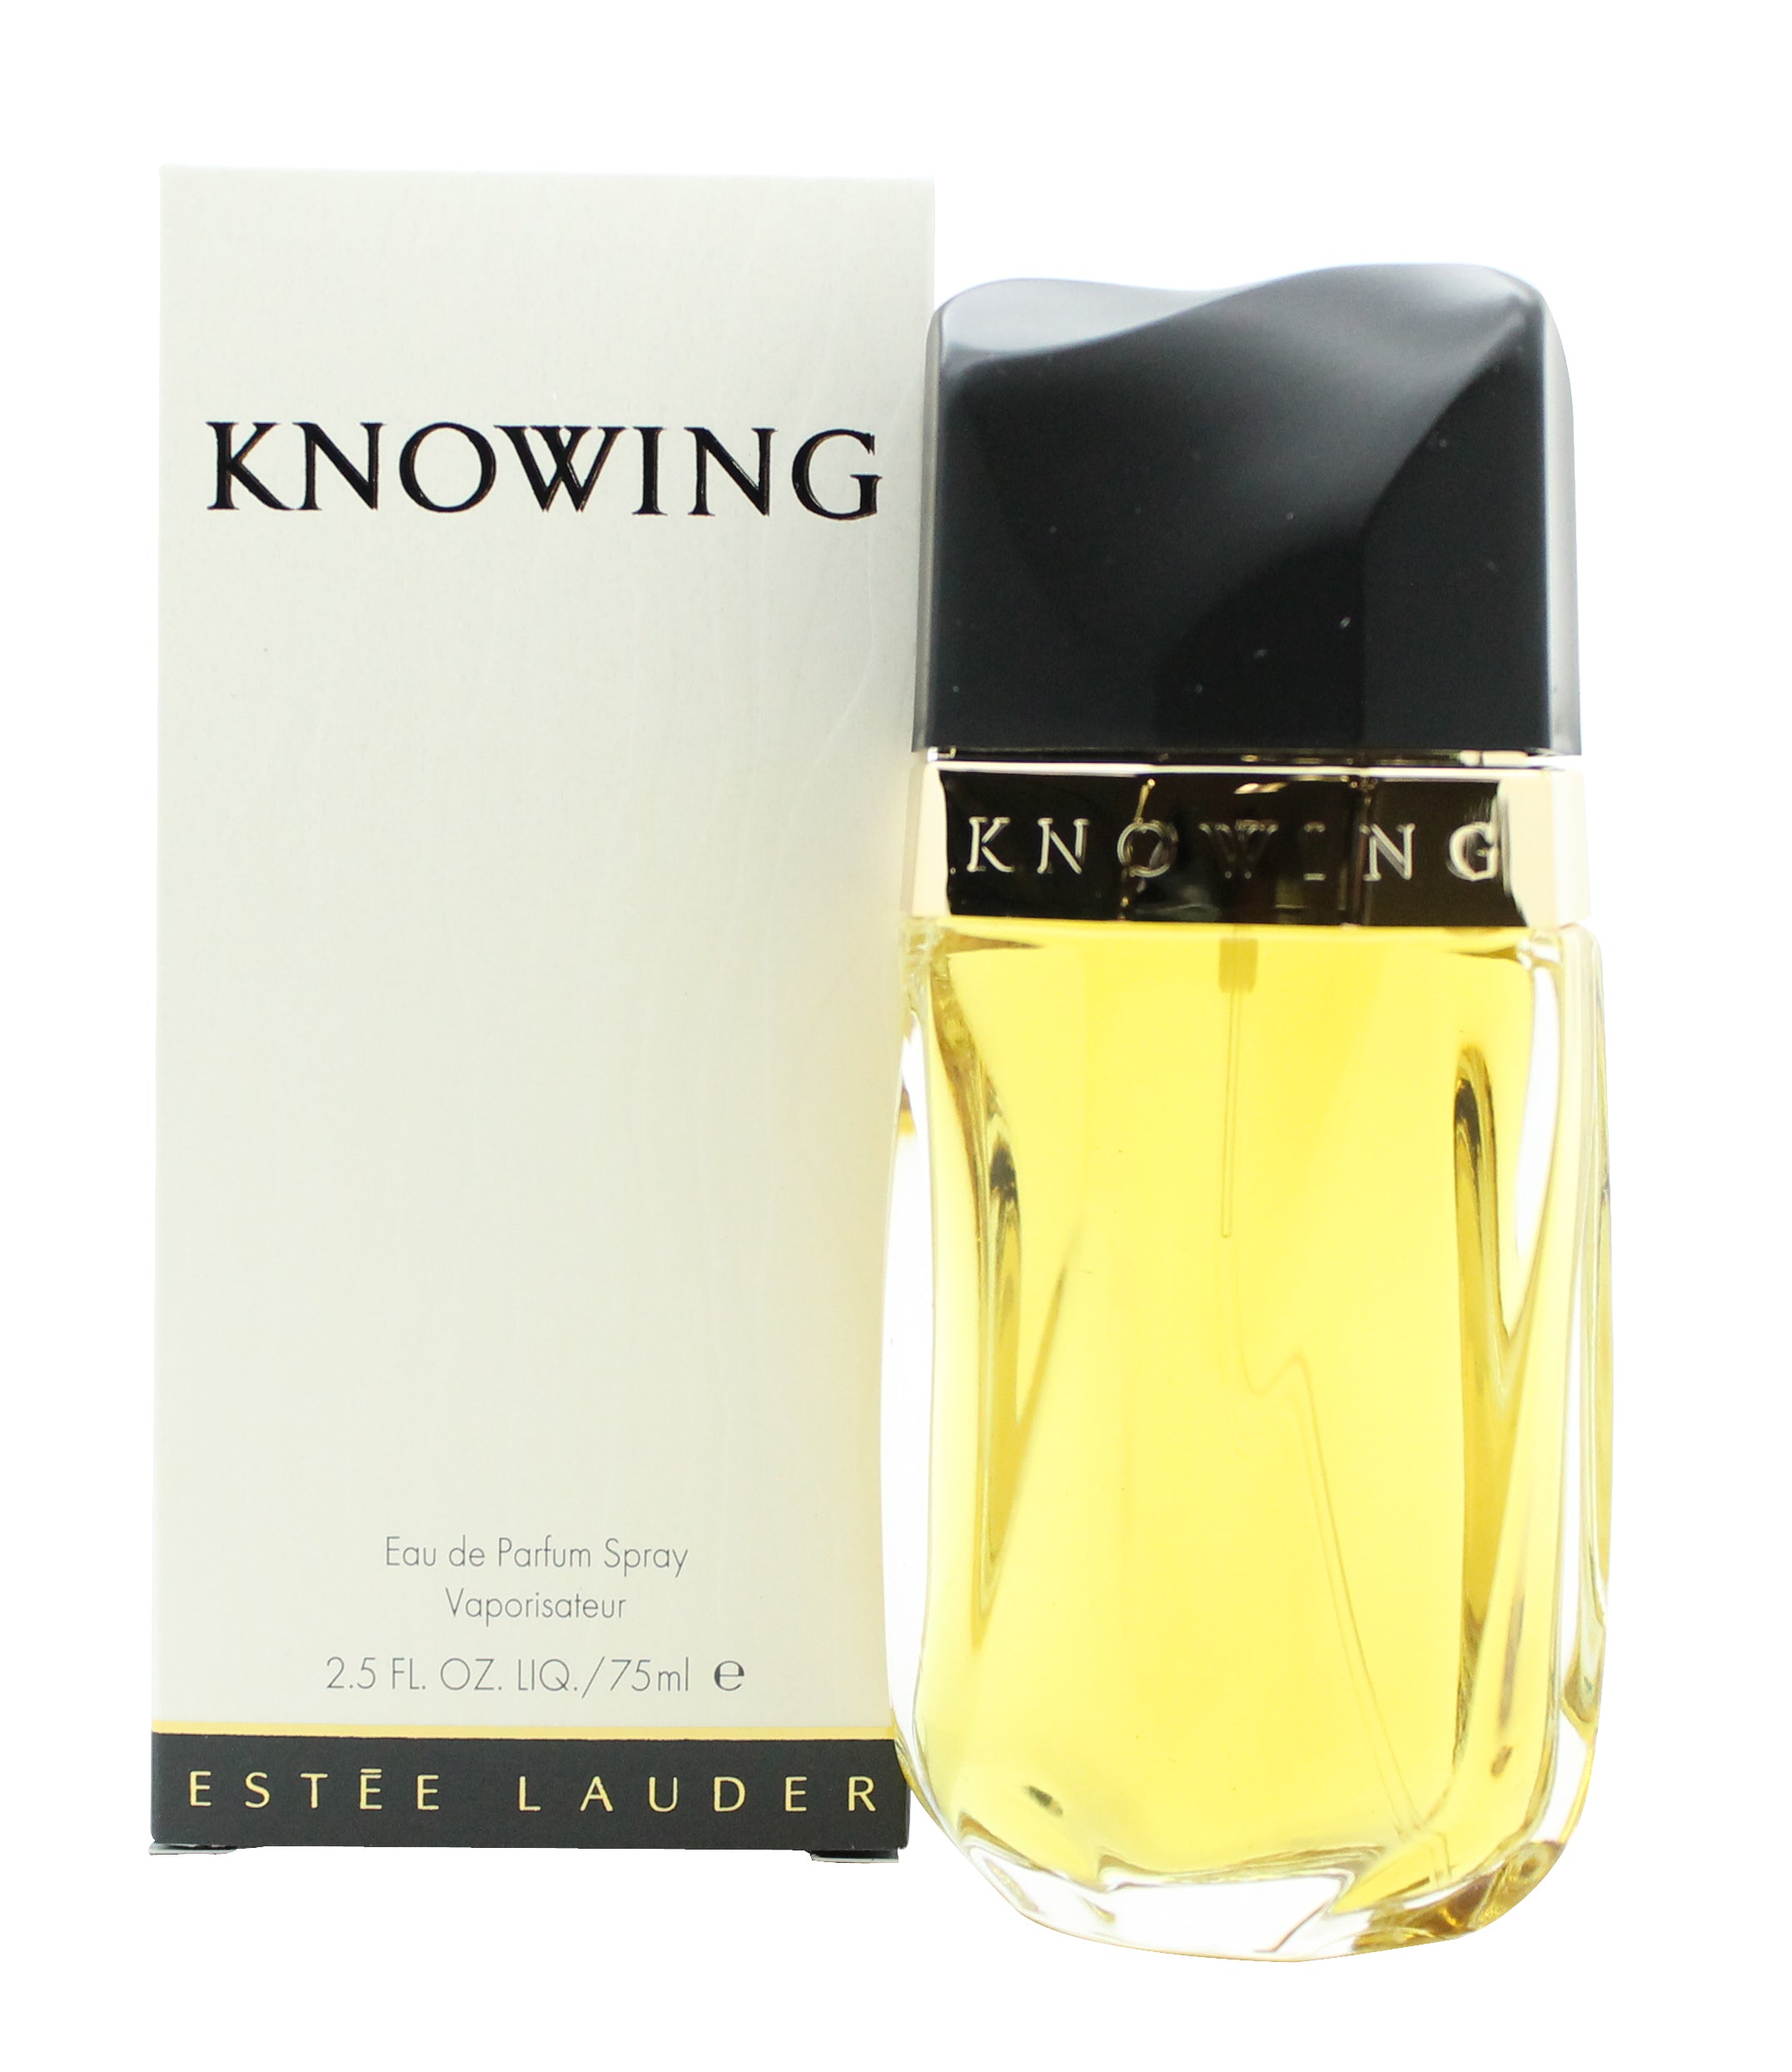 View Estee Lauder Knowing Eau de Parfum 75ml Spray information